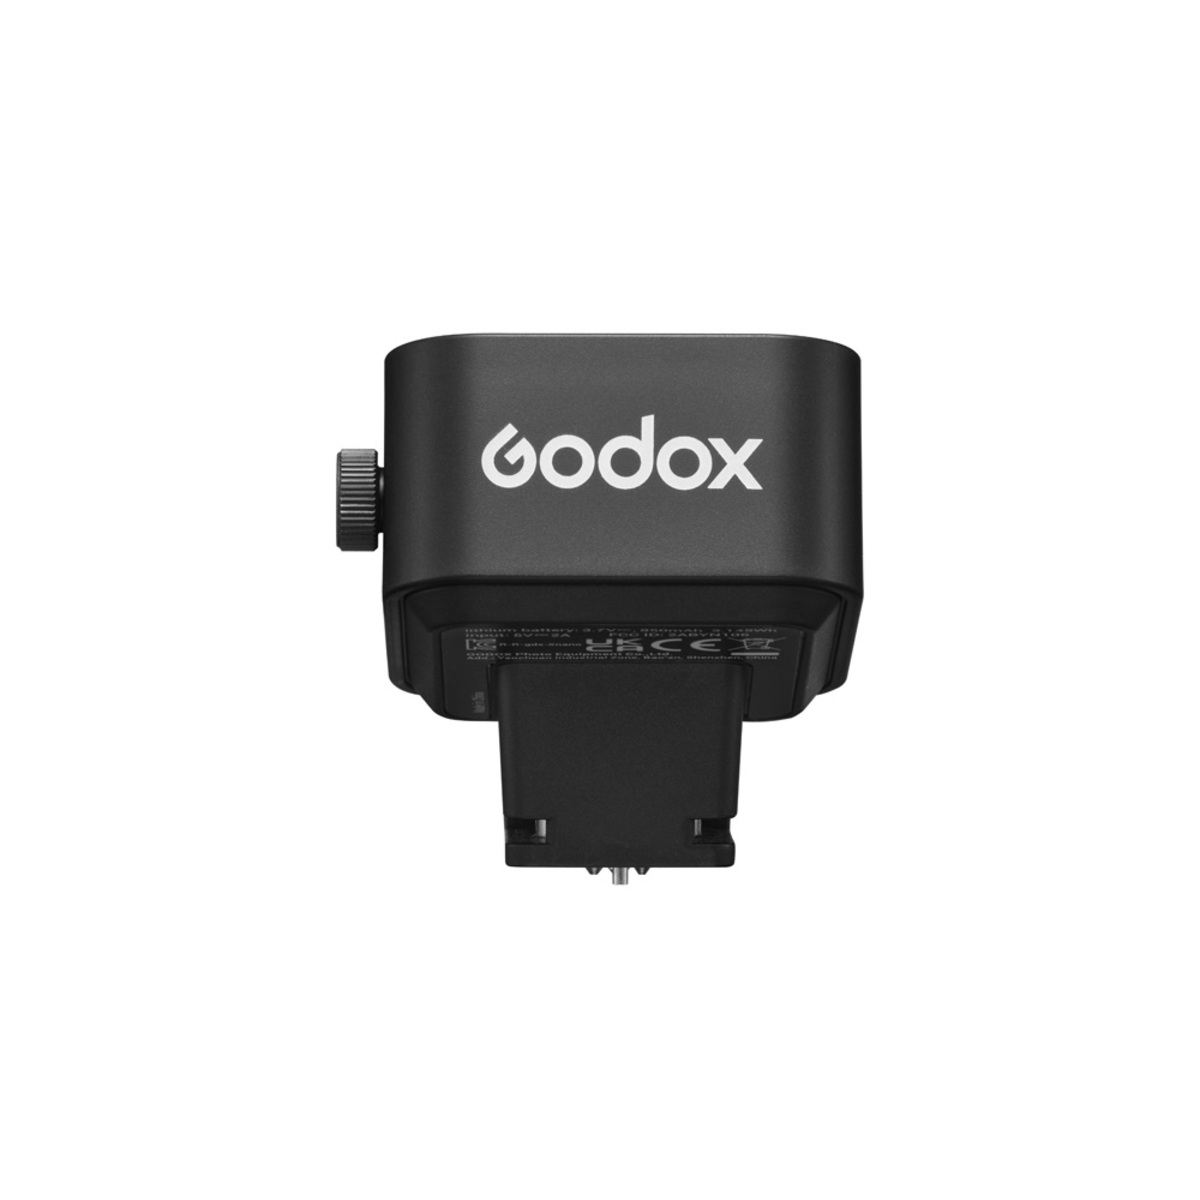 Godox XNano Transmitter for Nikon